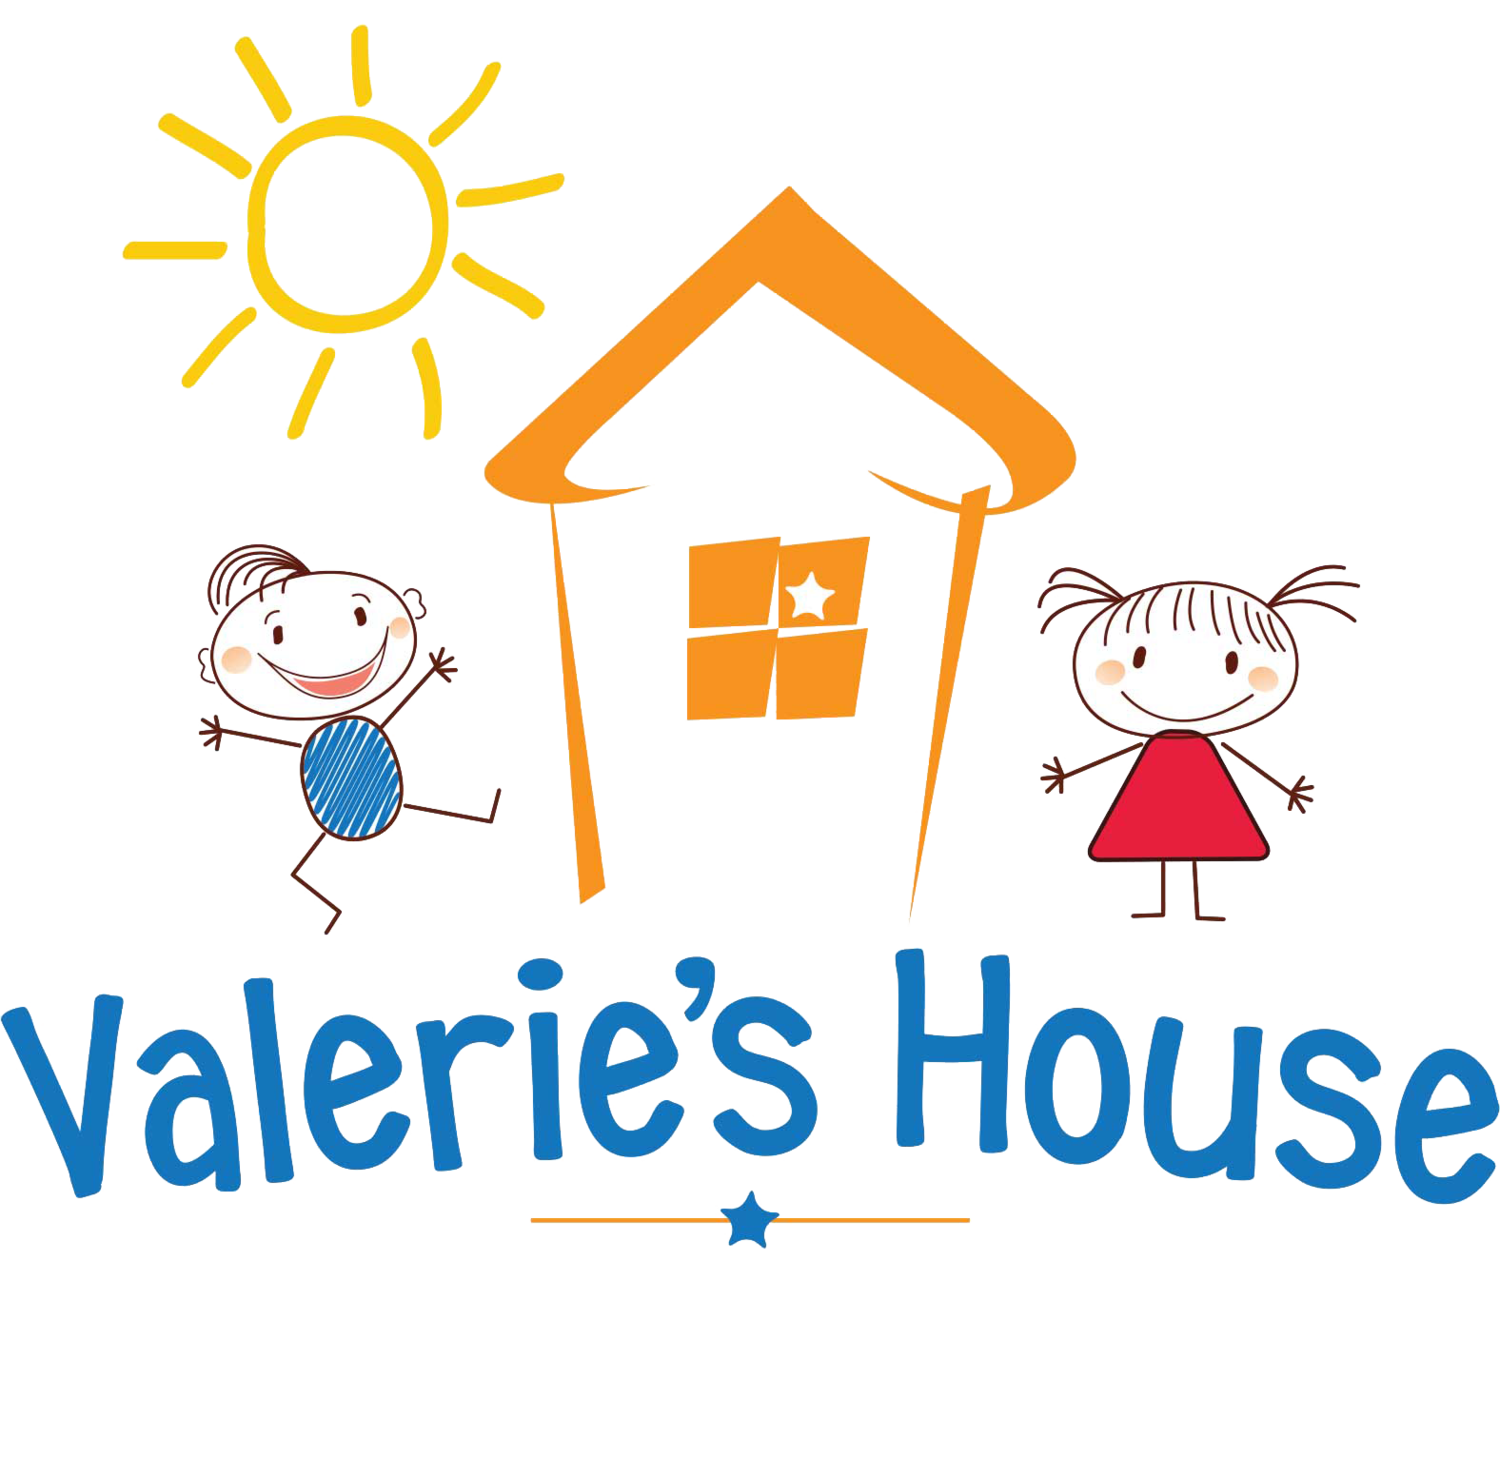 Valerie's House website (opens in new window)